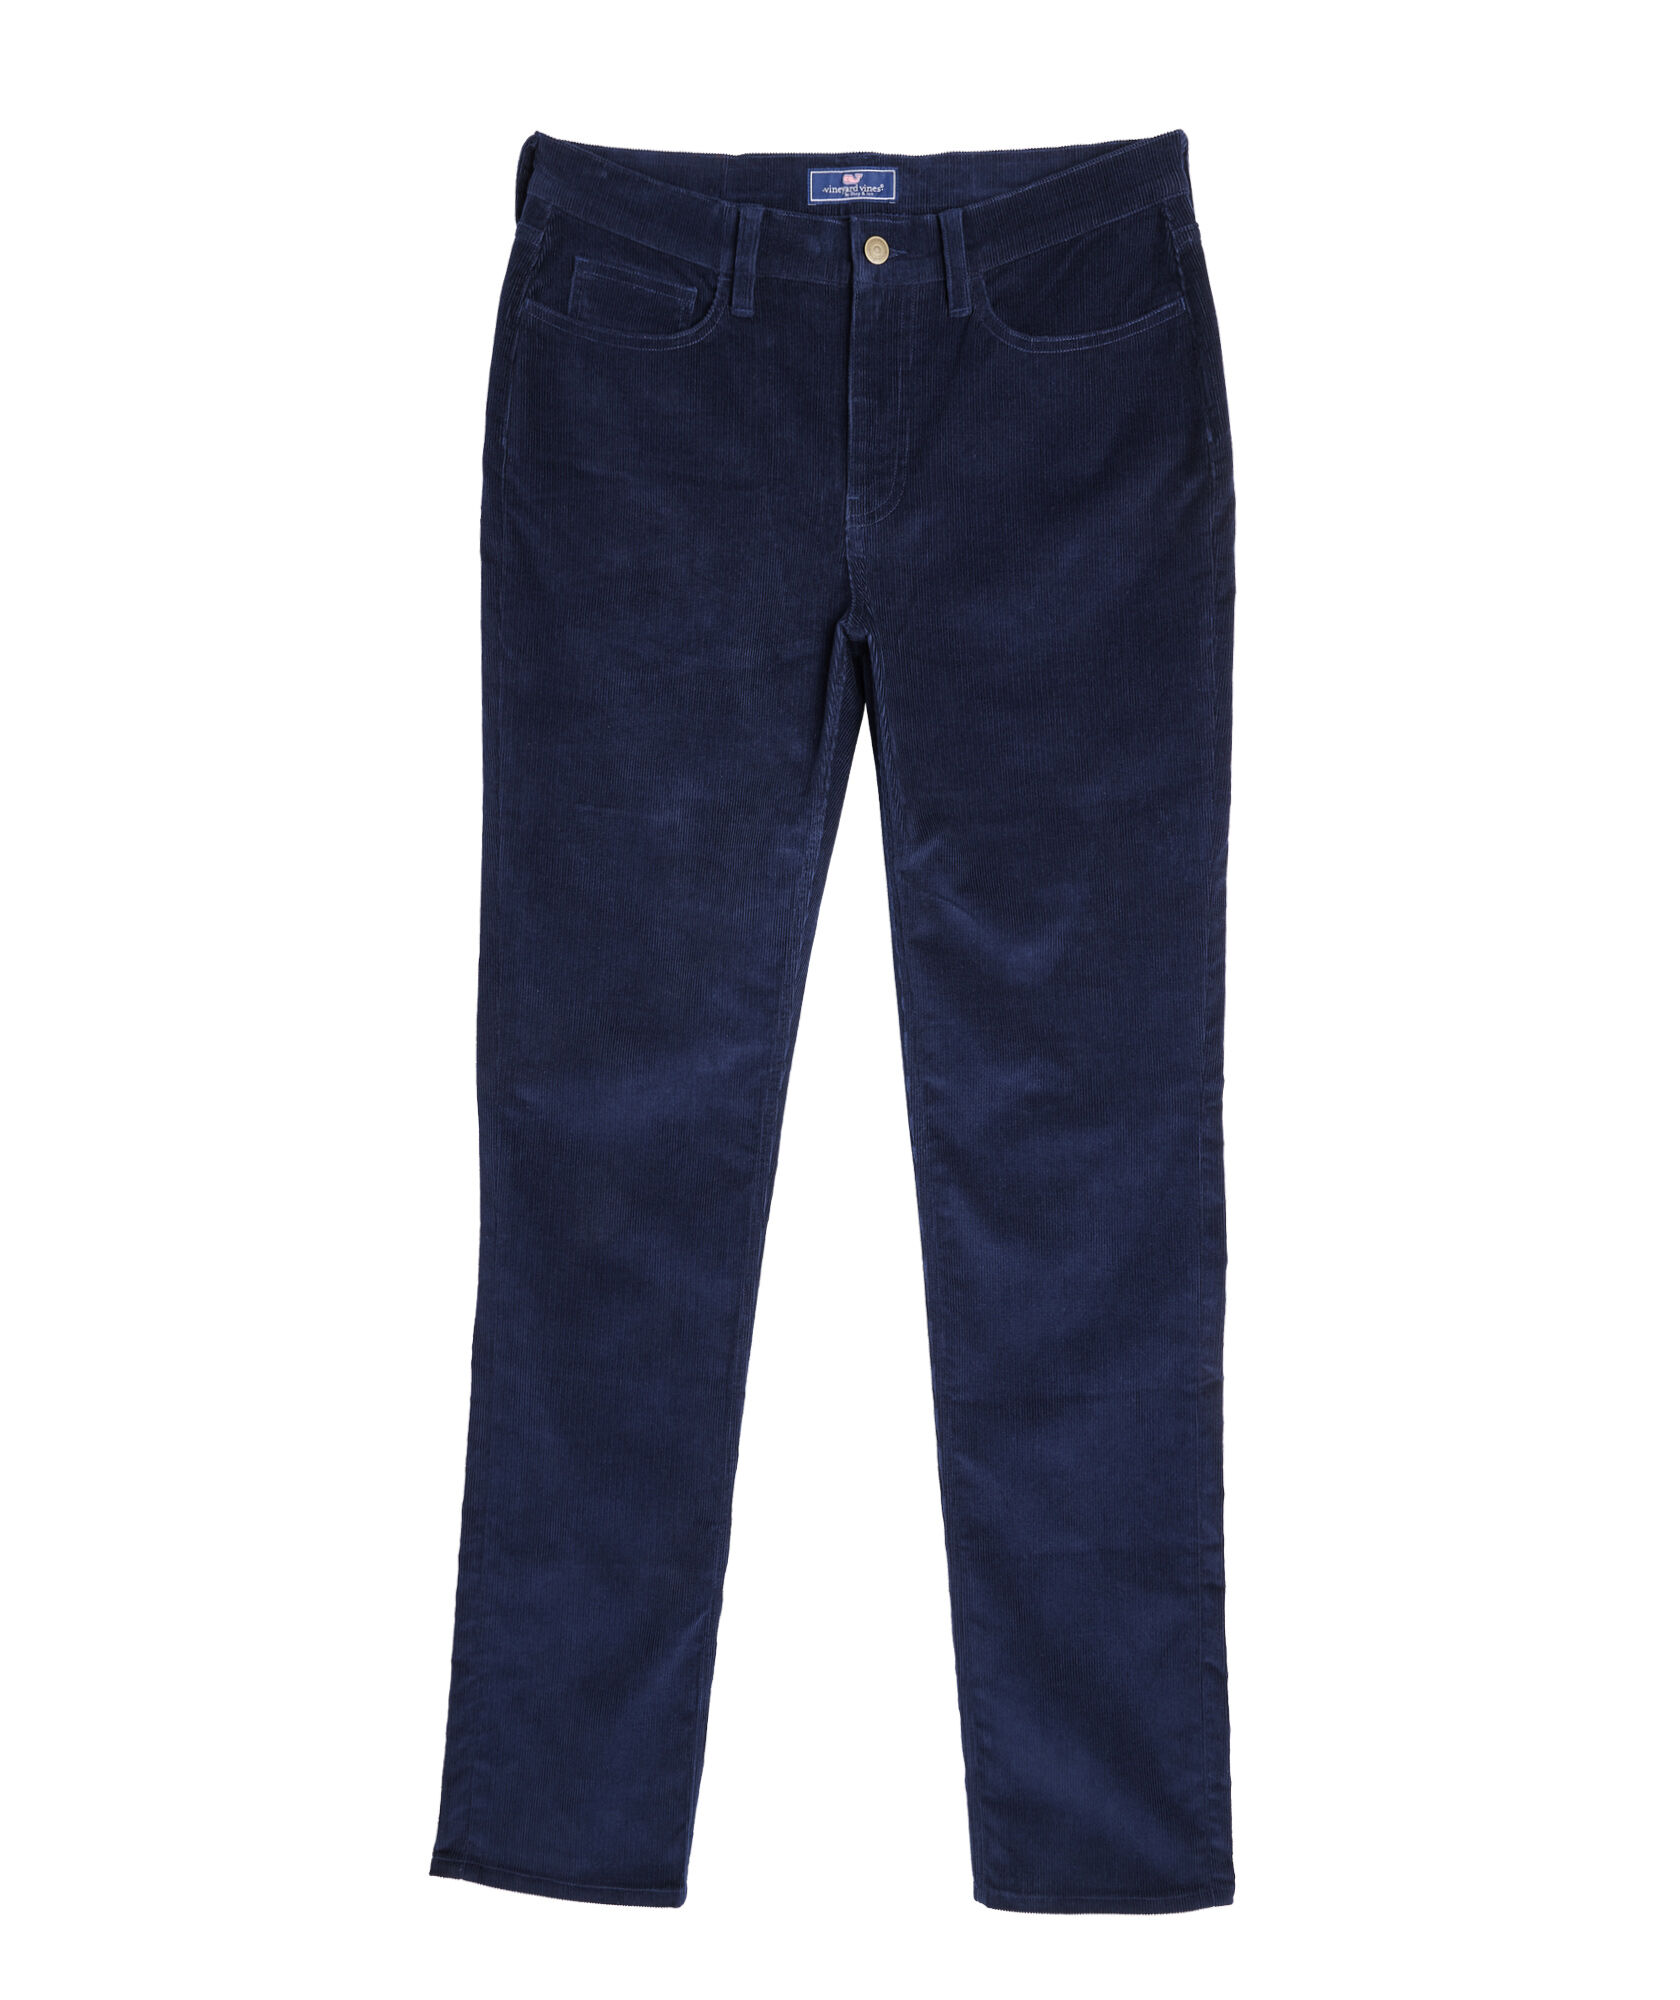 OUTLET Corduroy 5-Pocket Pants